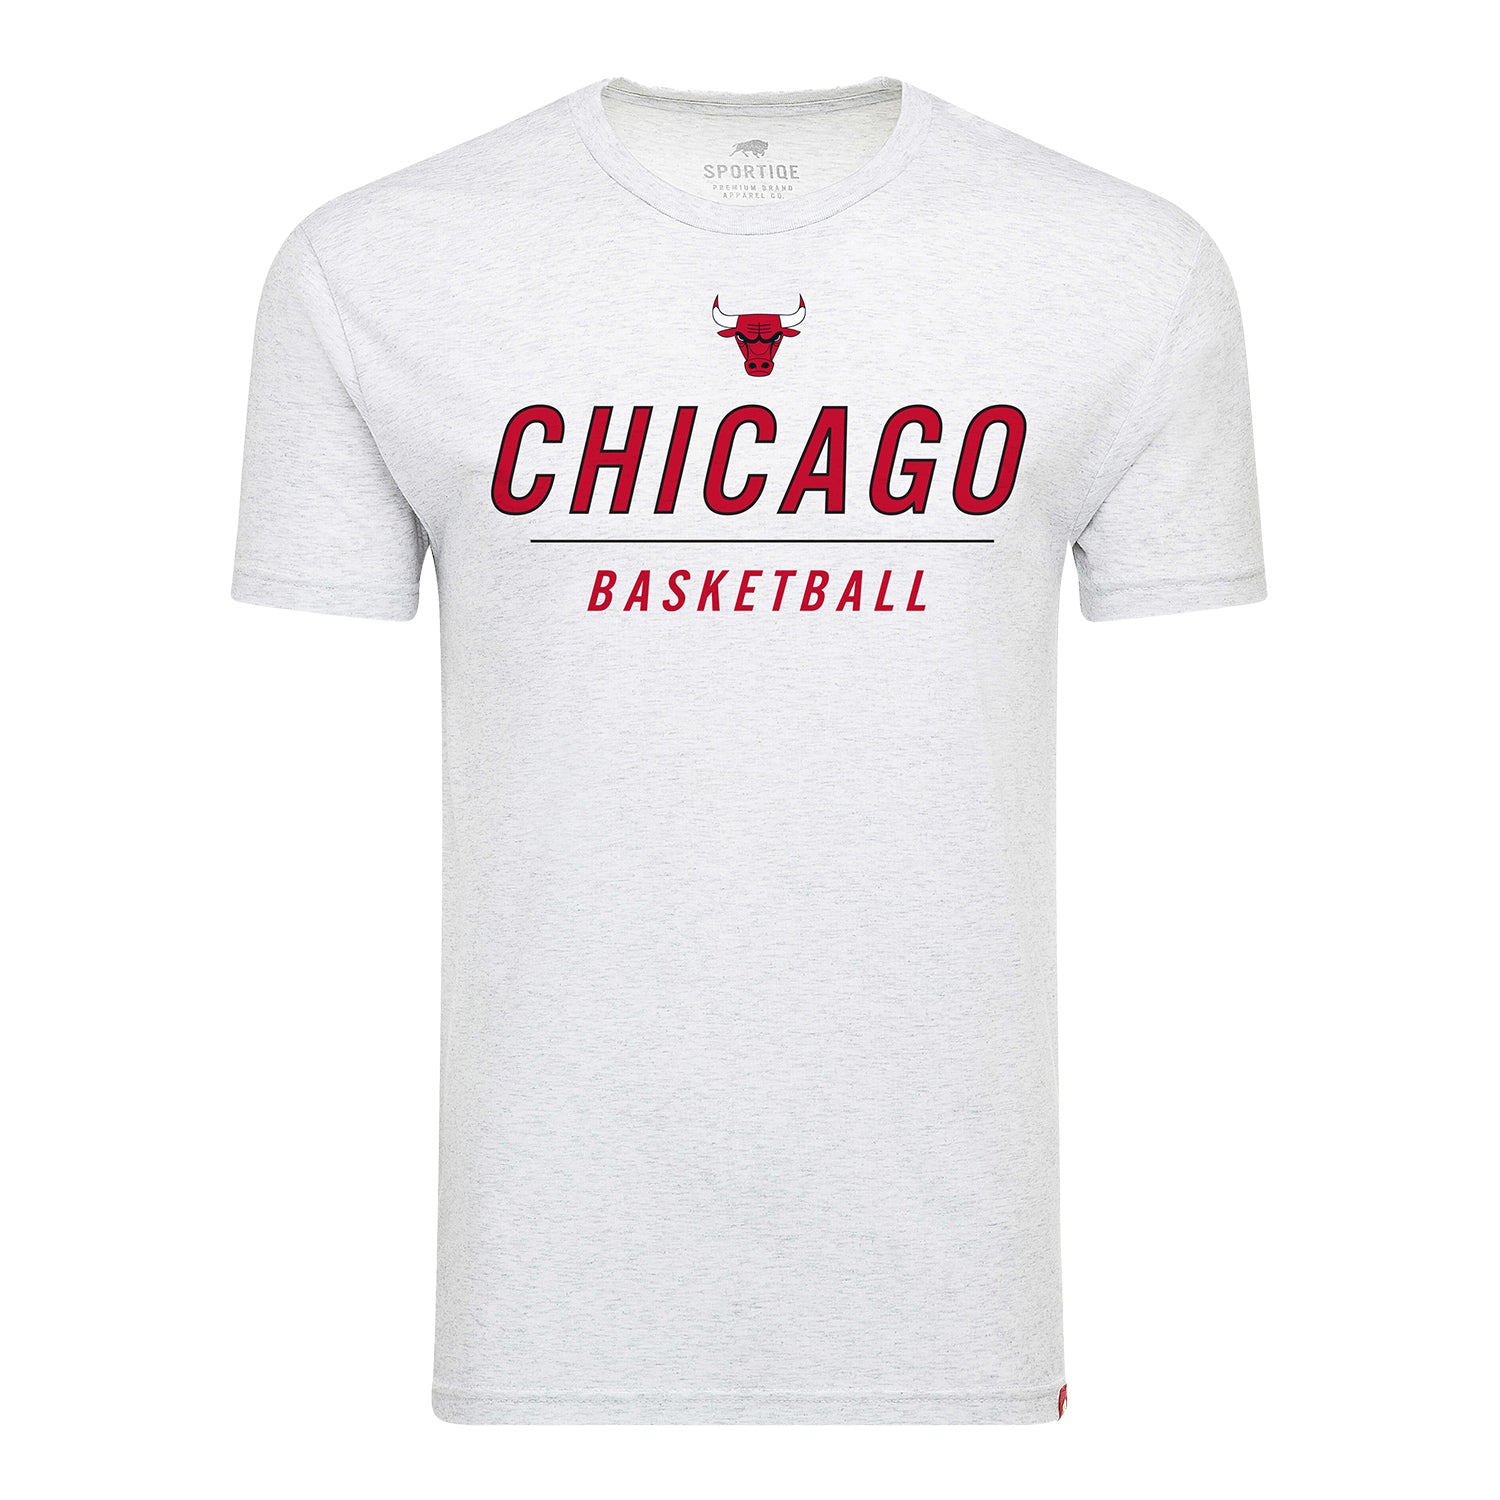 white chicago bulls t shirt